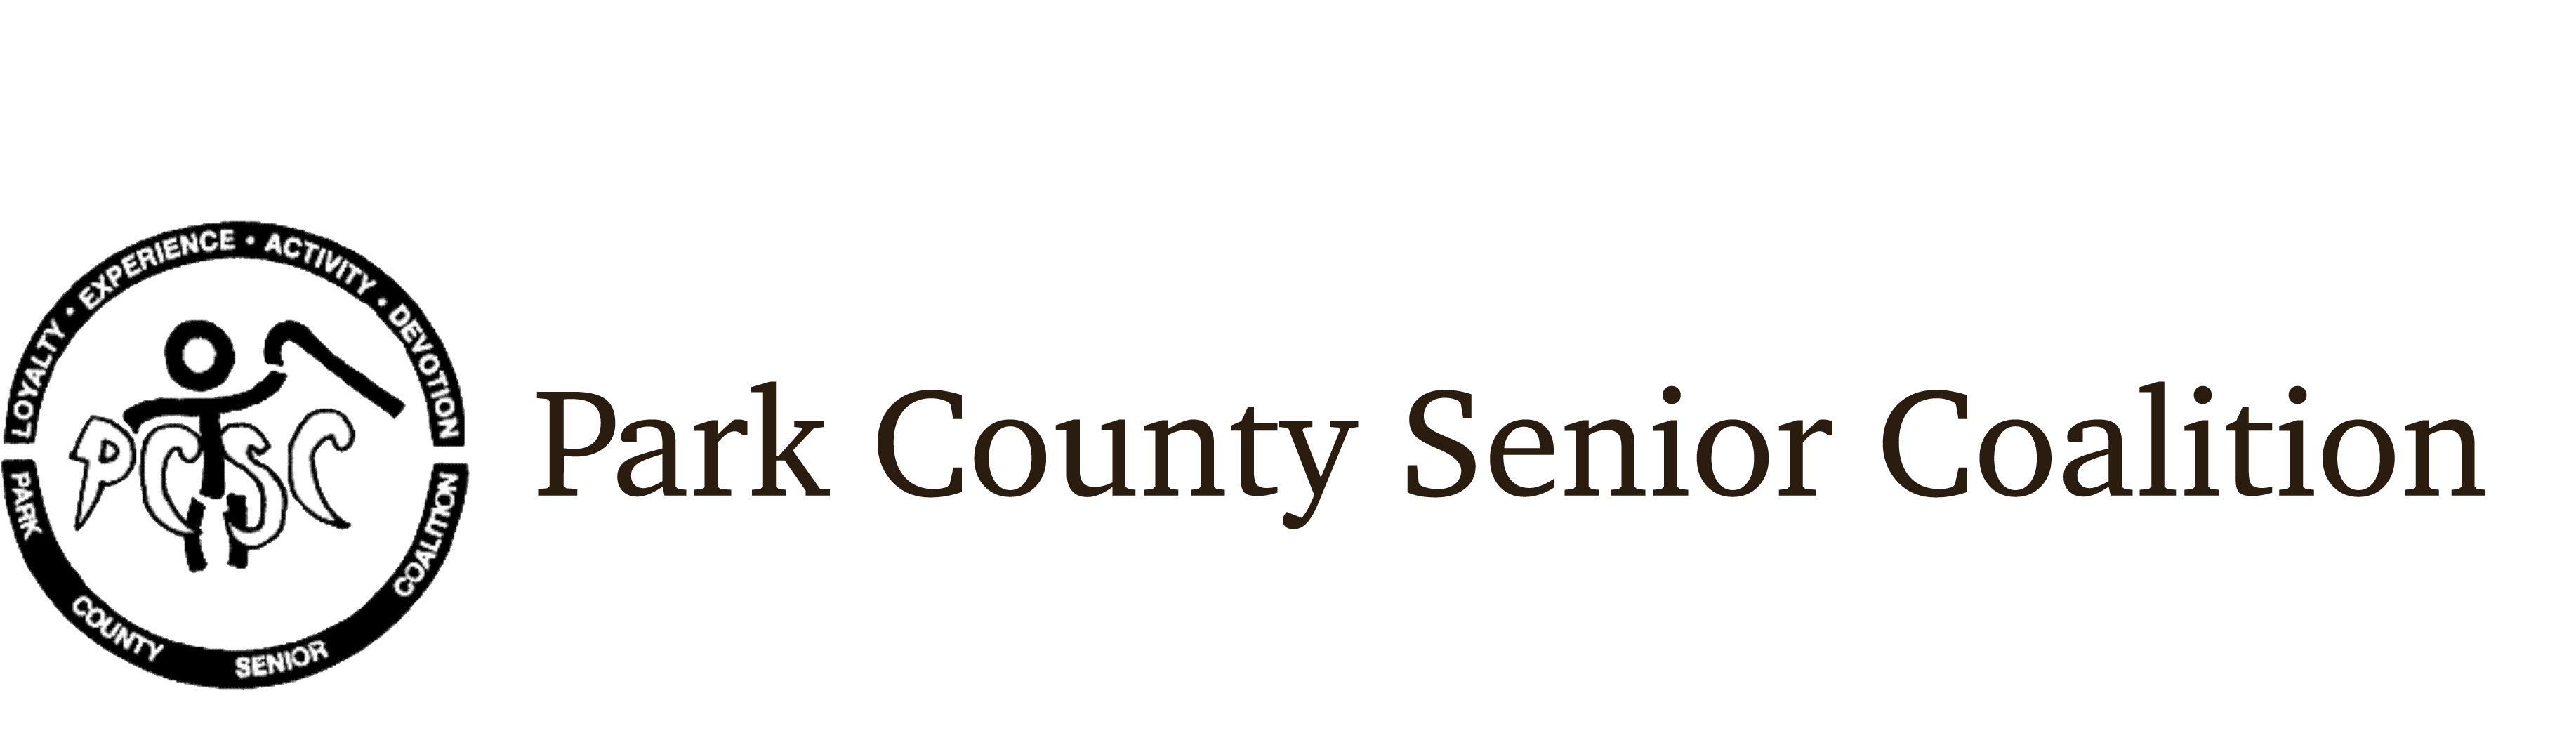 Park County Senior Coalition